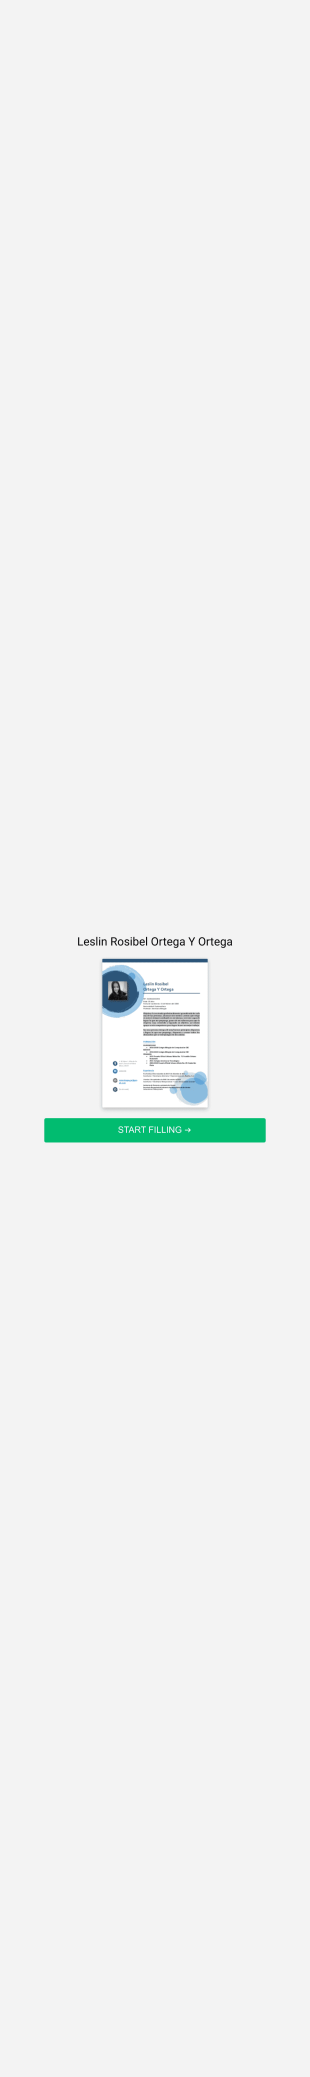 Leslin Rosibel Ortega Y Ortega Form Template